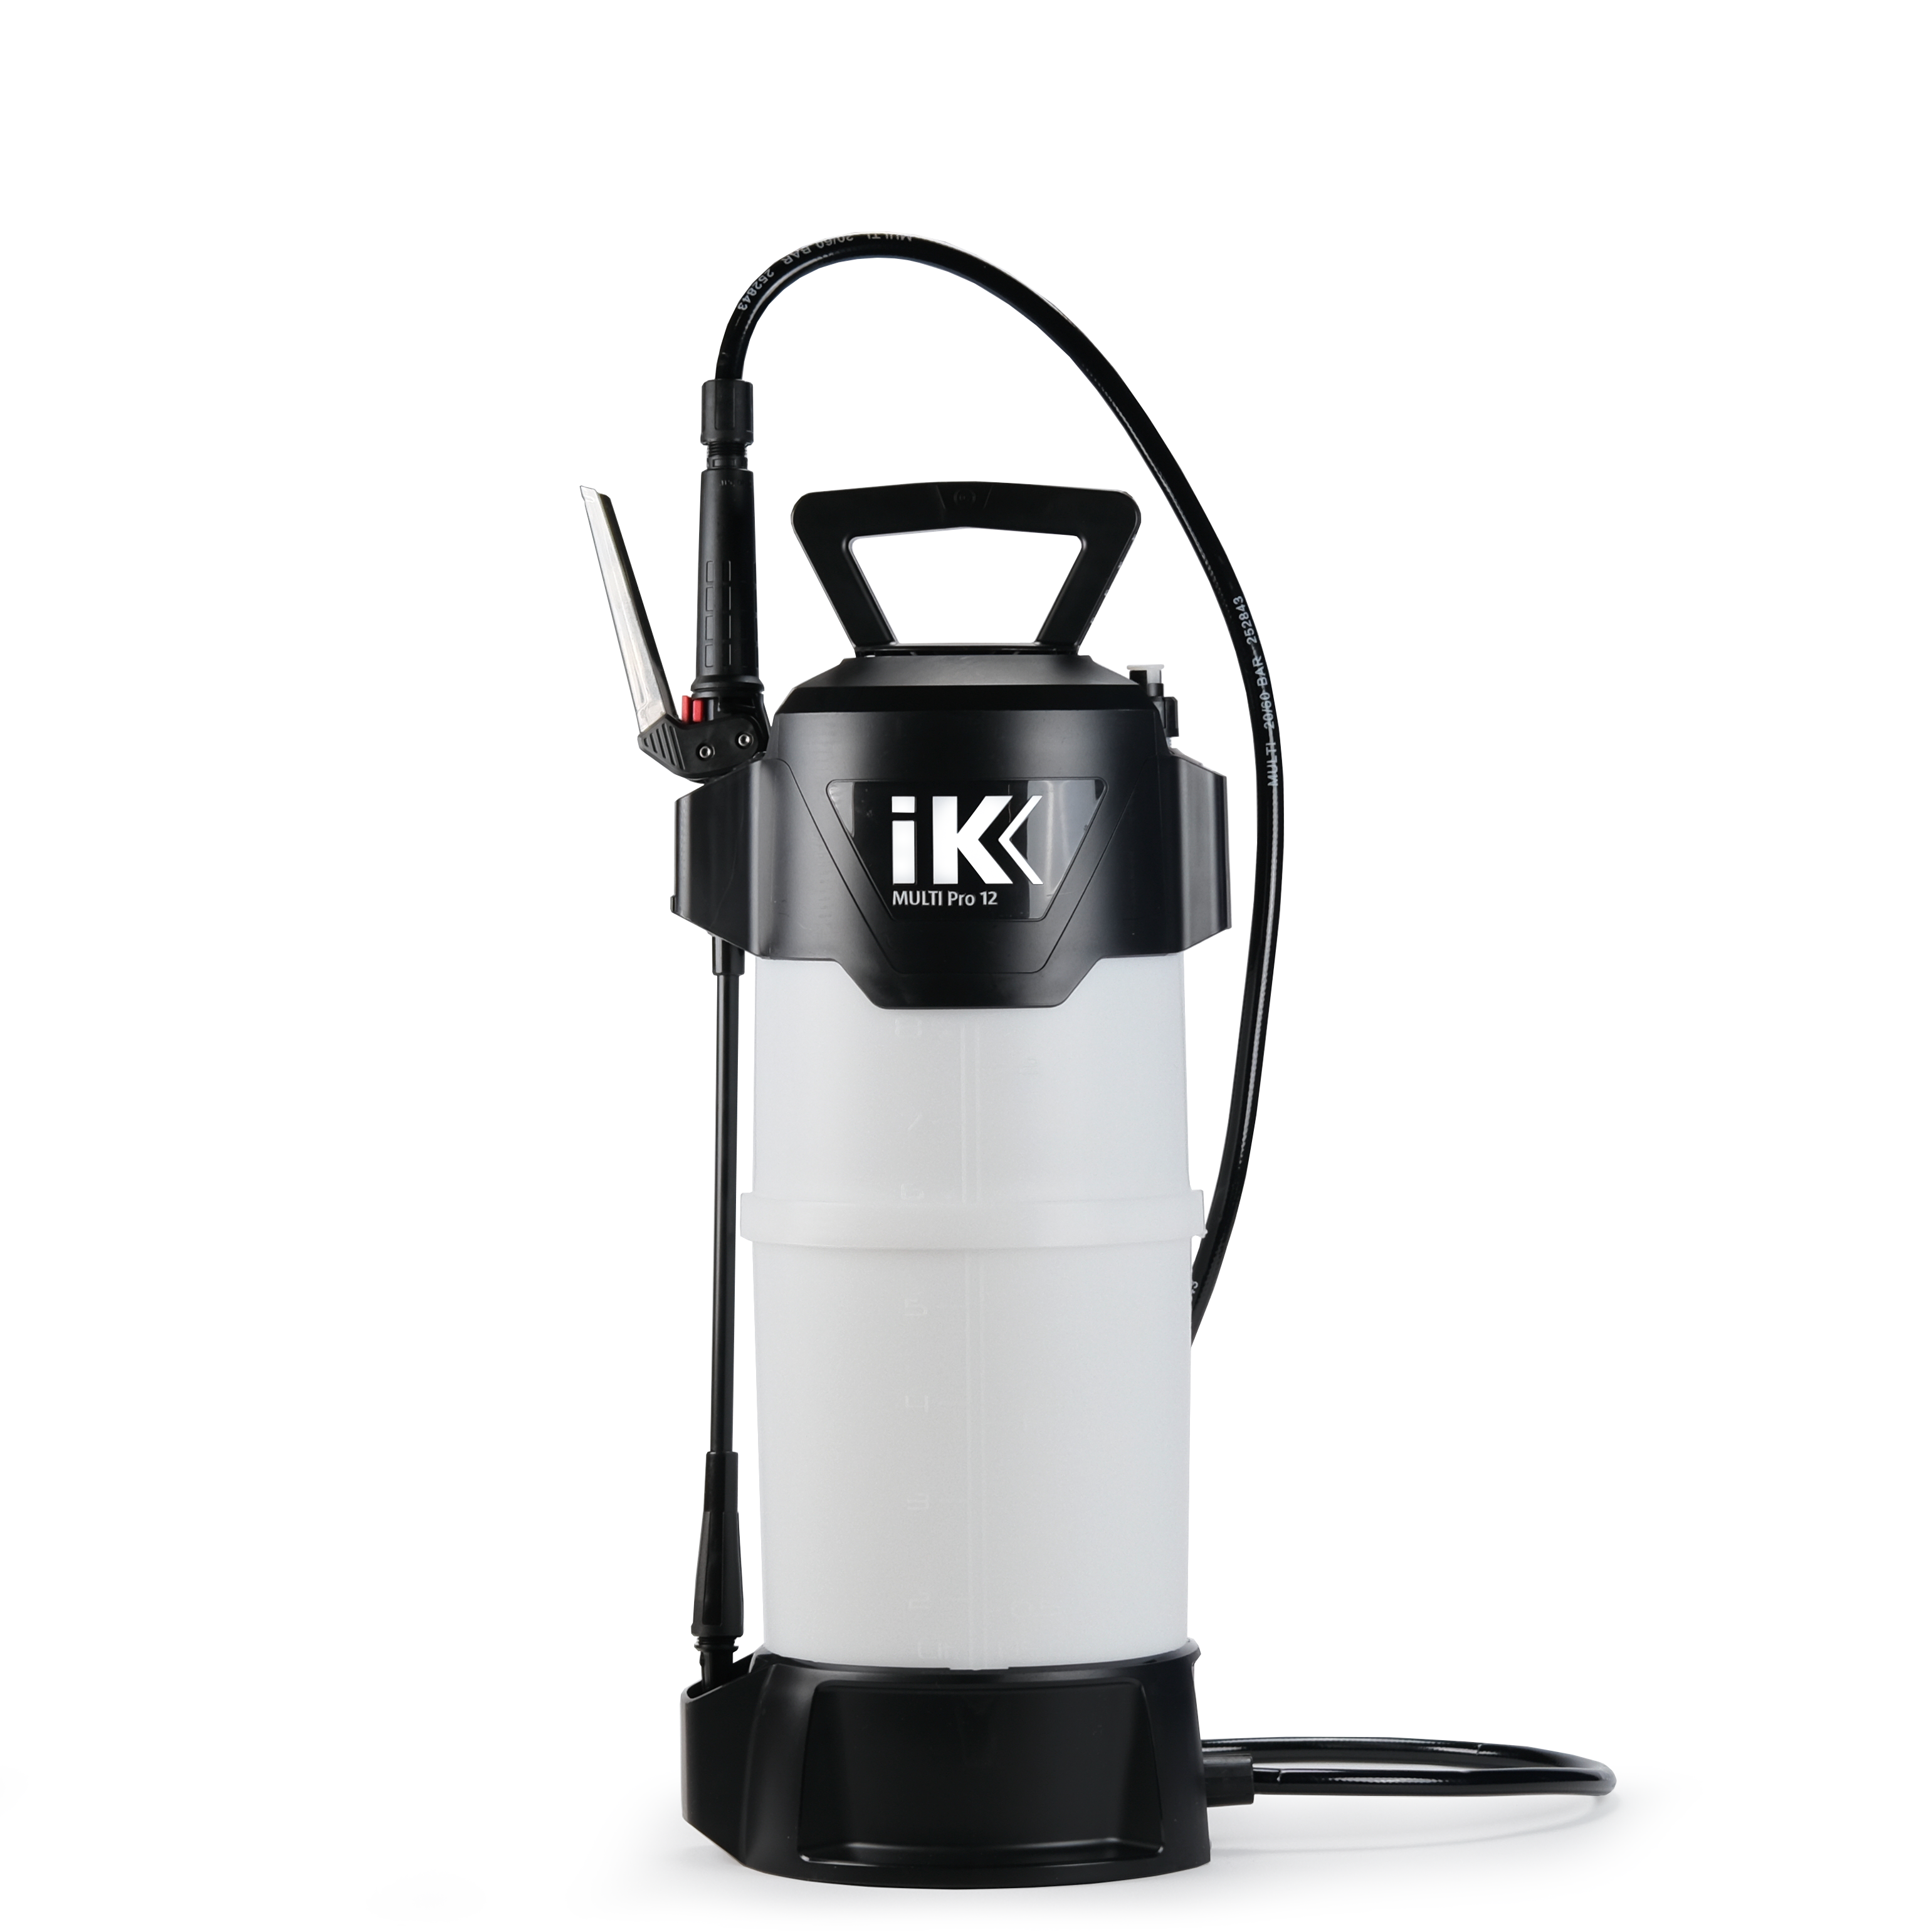 IK Foam Pro 12 Nozzle Kit